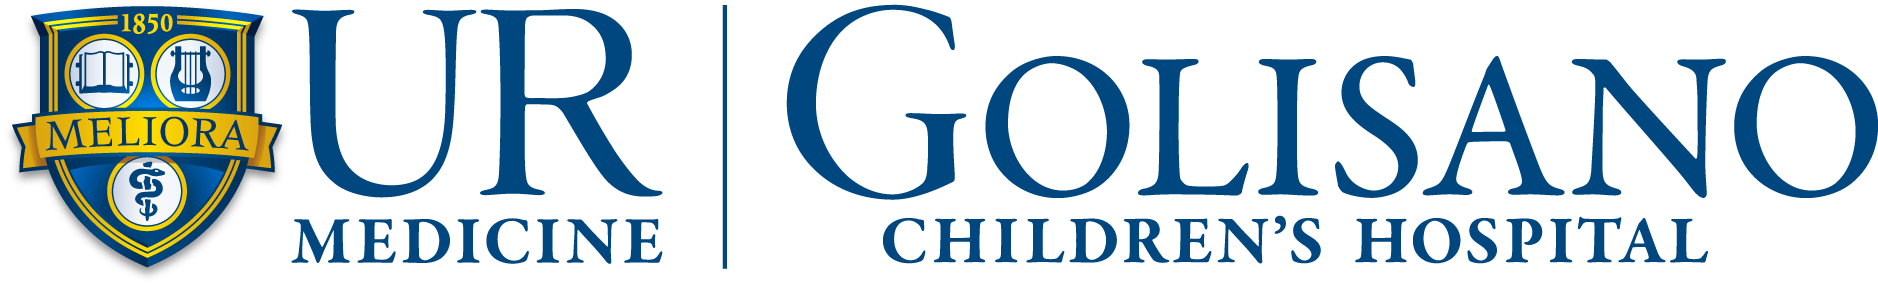 URMC Golisano Childrens Hospital Logos